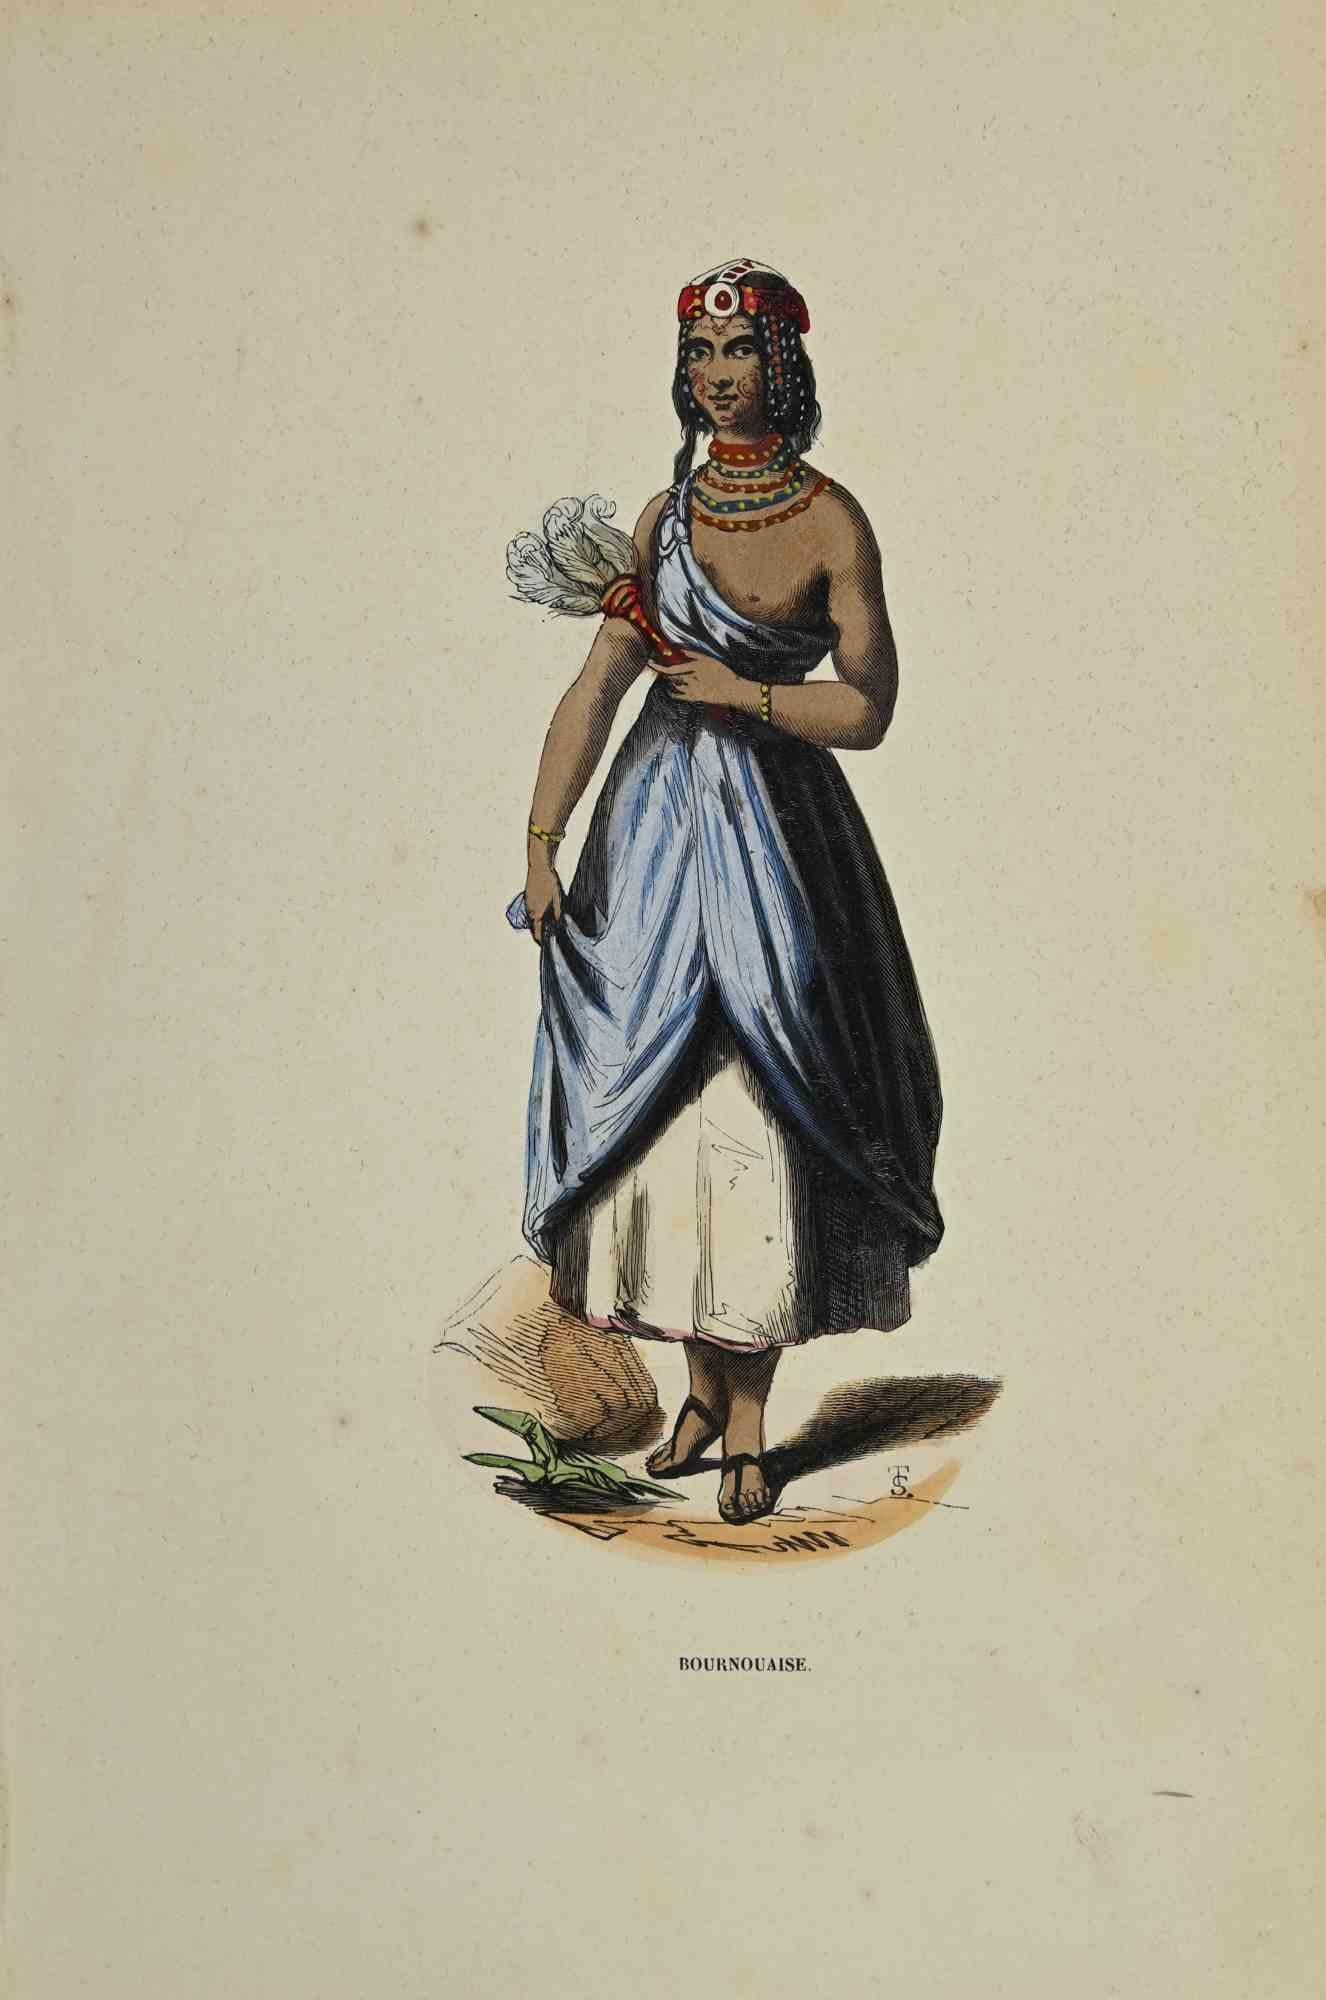 Bournouaise - Lithograph by Auguste Wahlen - 1844